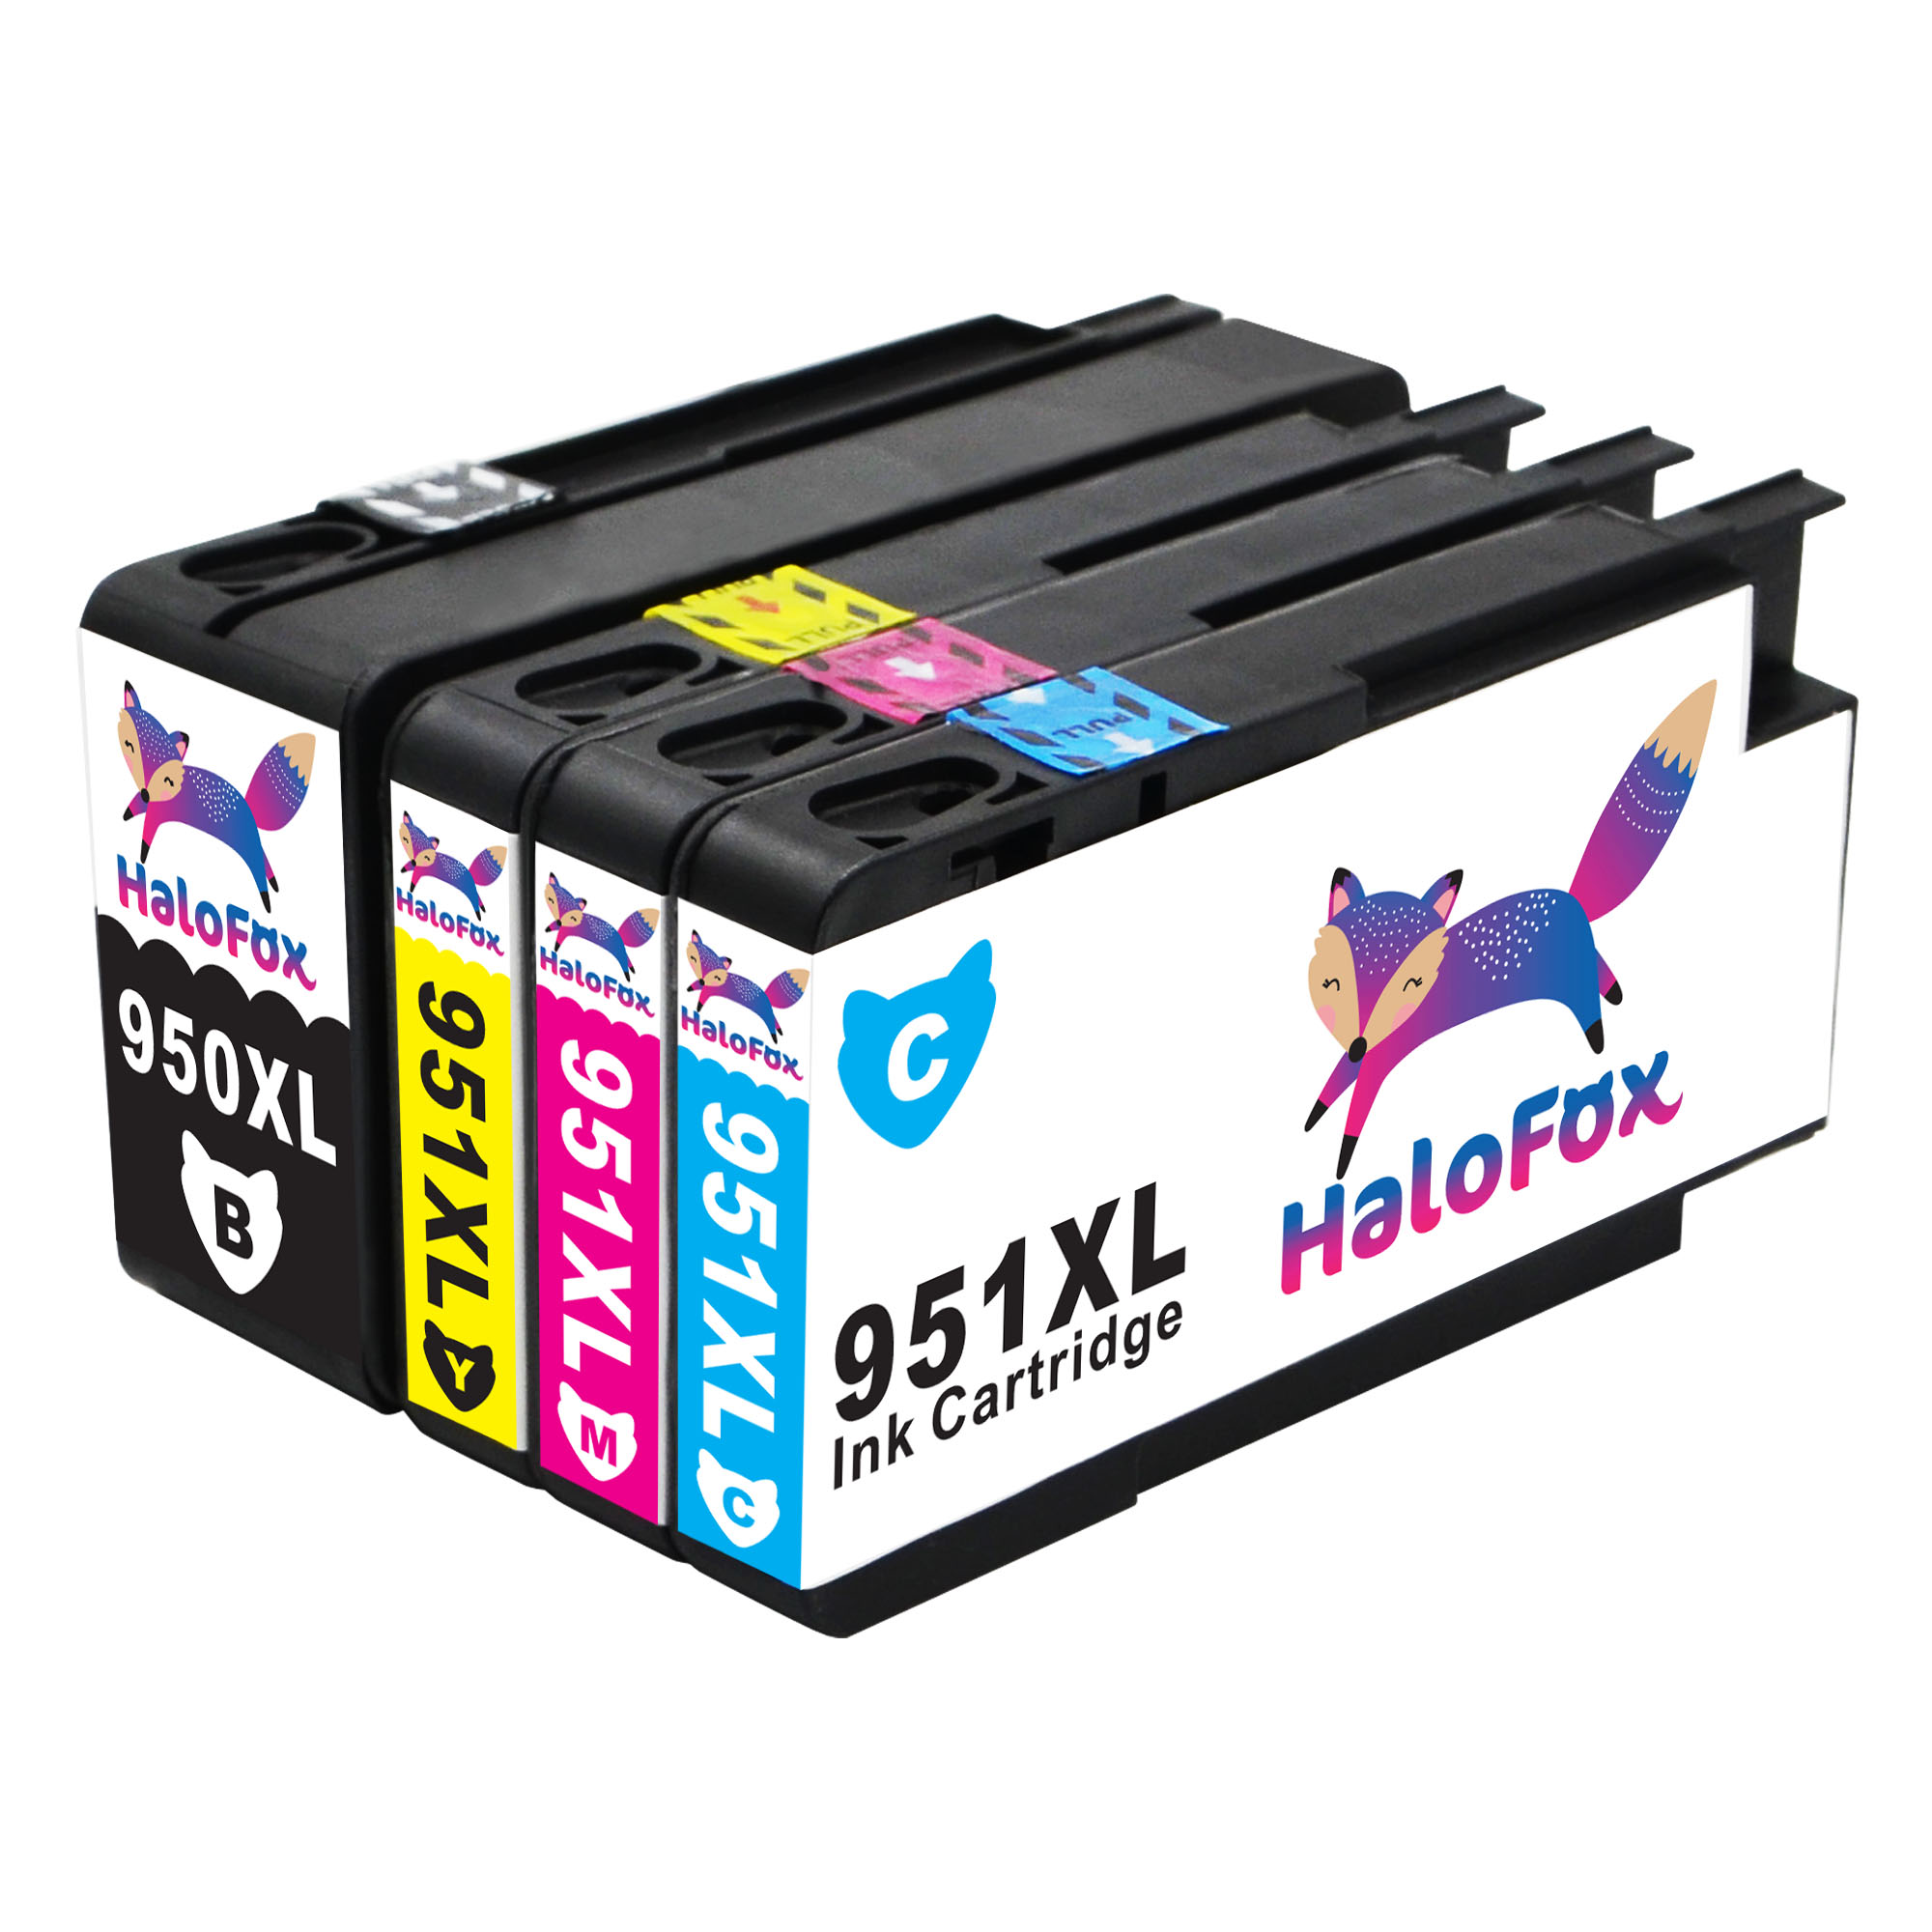 4PK Ink Cartridges 950XL 951XL Compatible for HP OfficeJet Pro 8610 8620 8100 8660 276dw